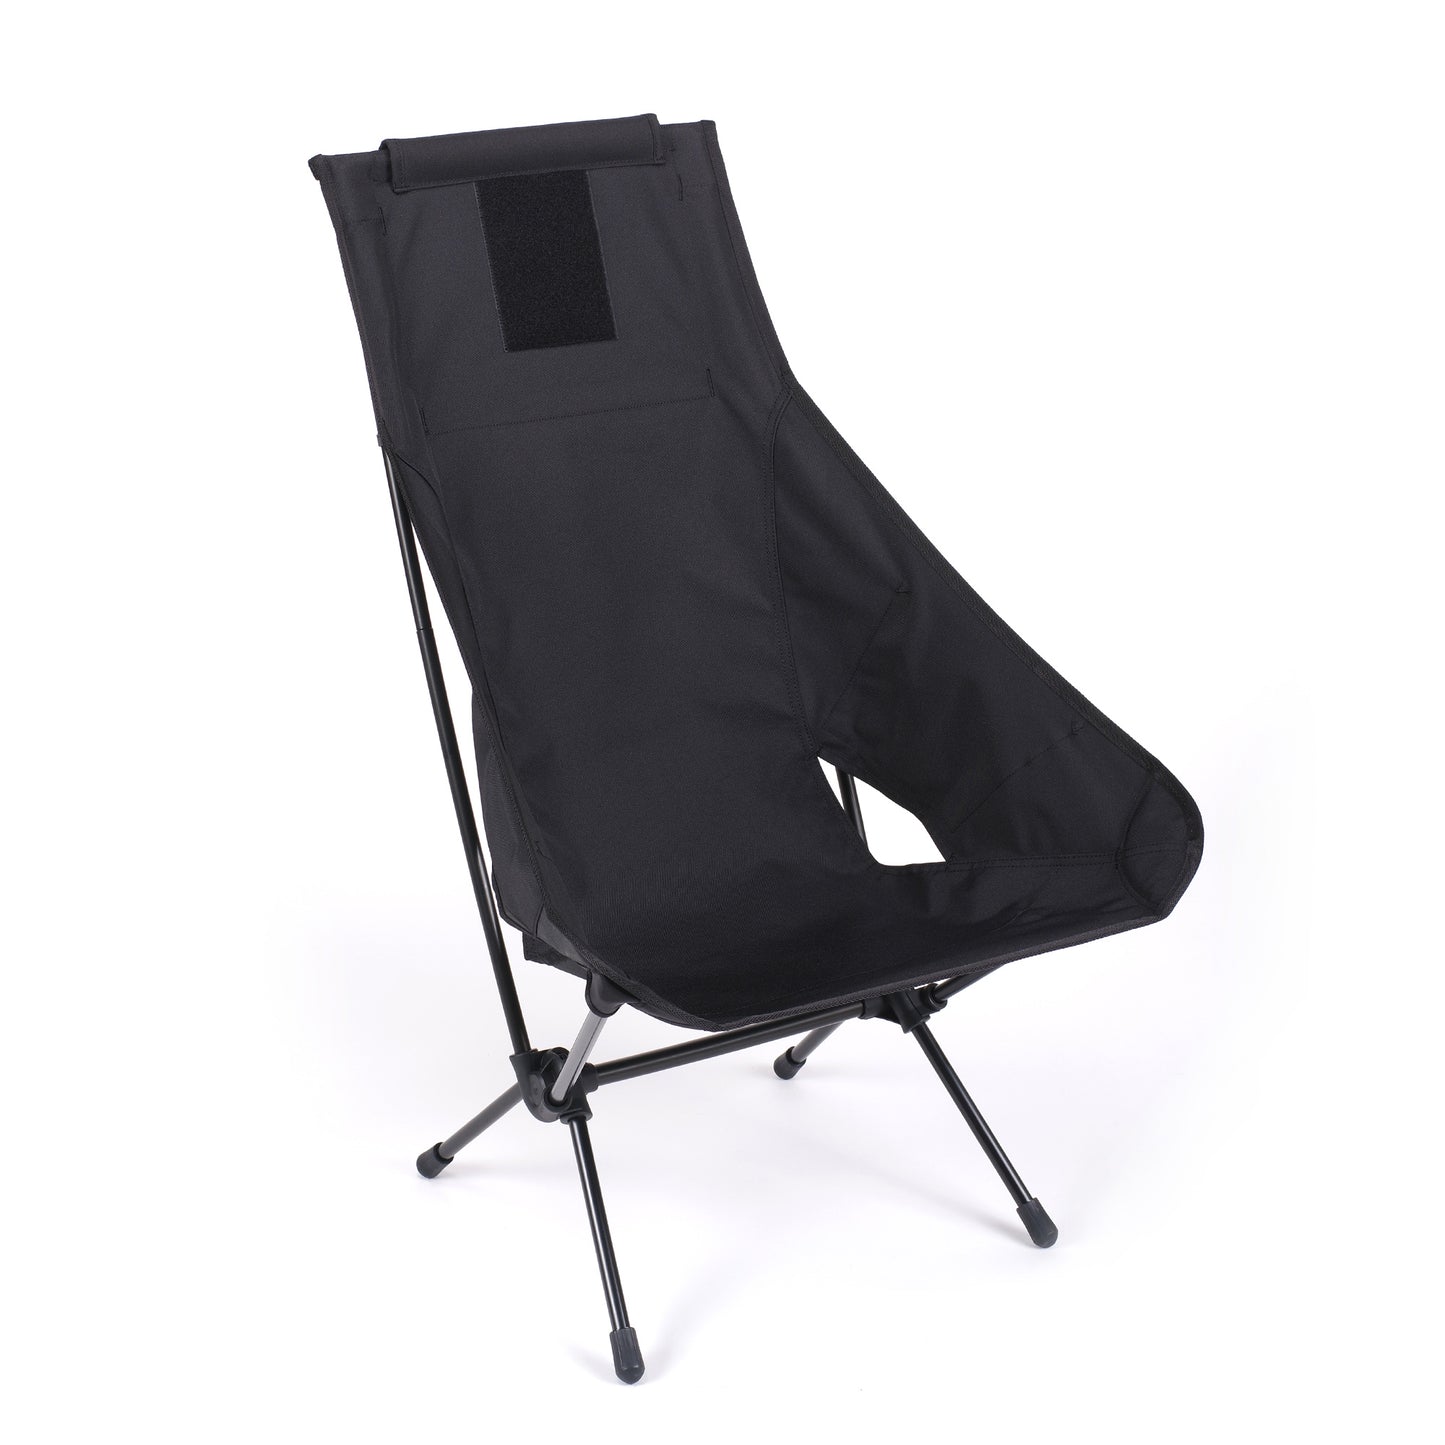 Tac. Chair Two - Black